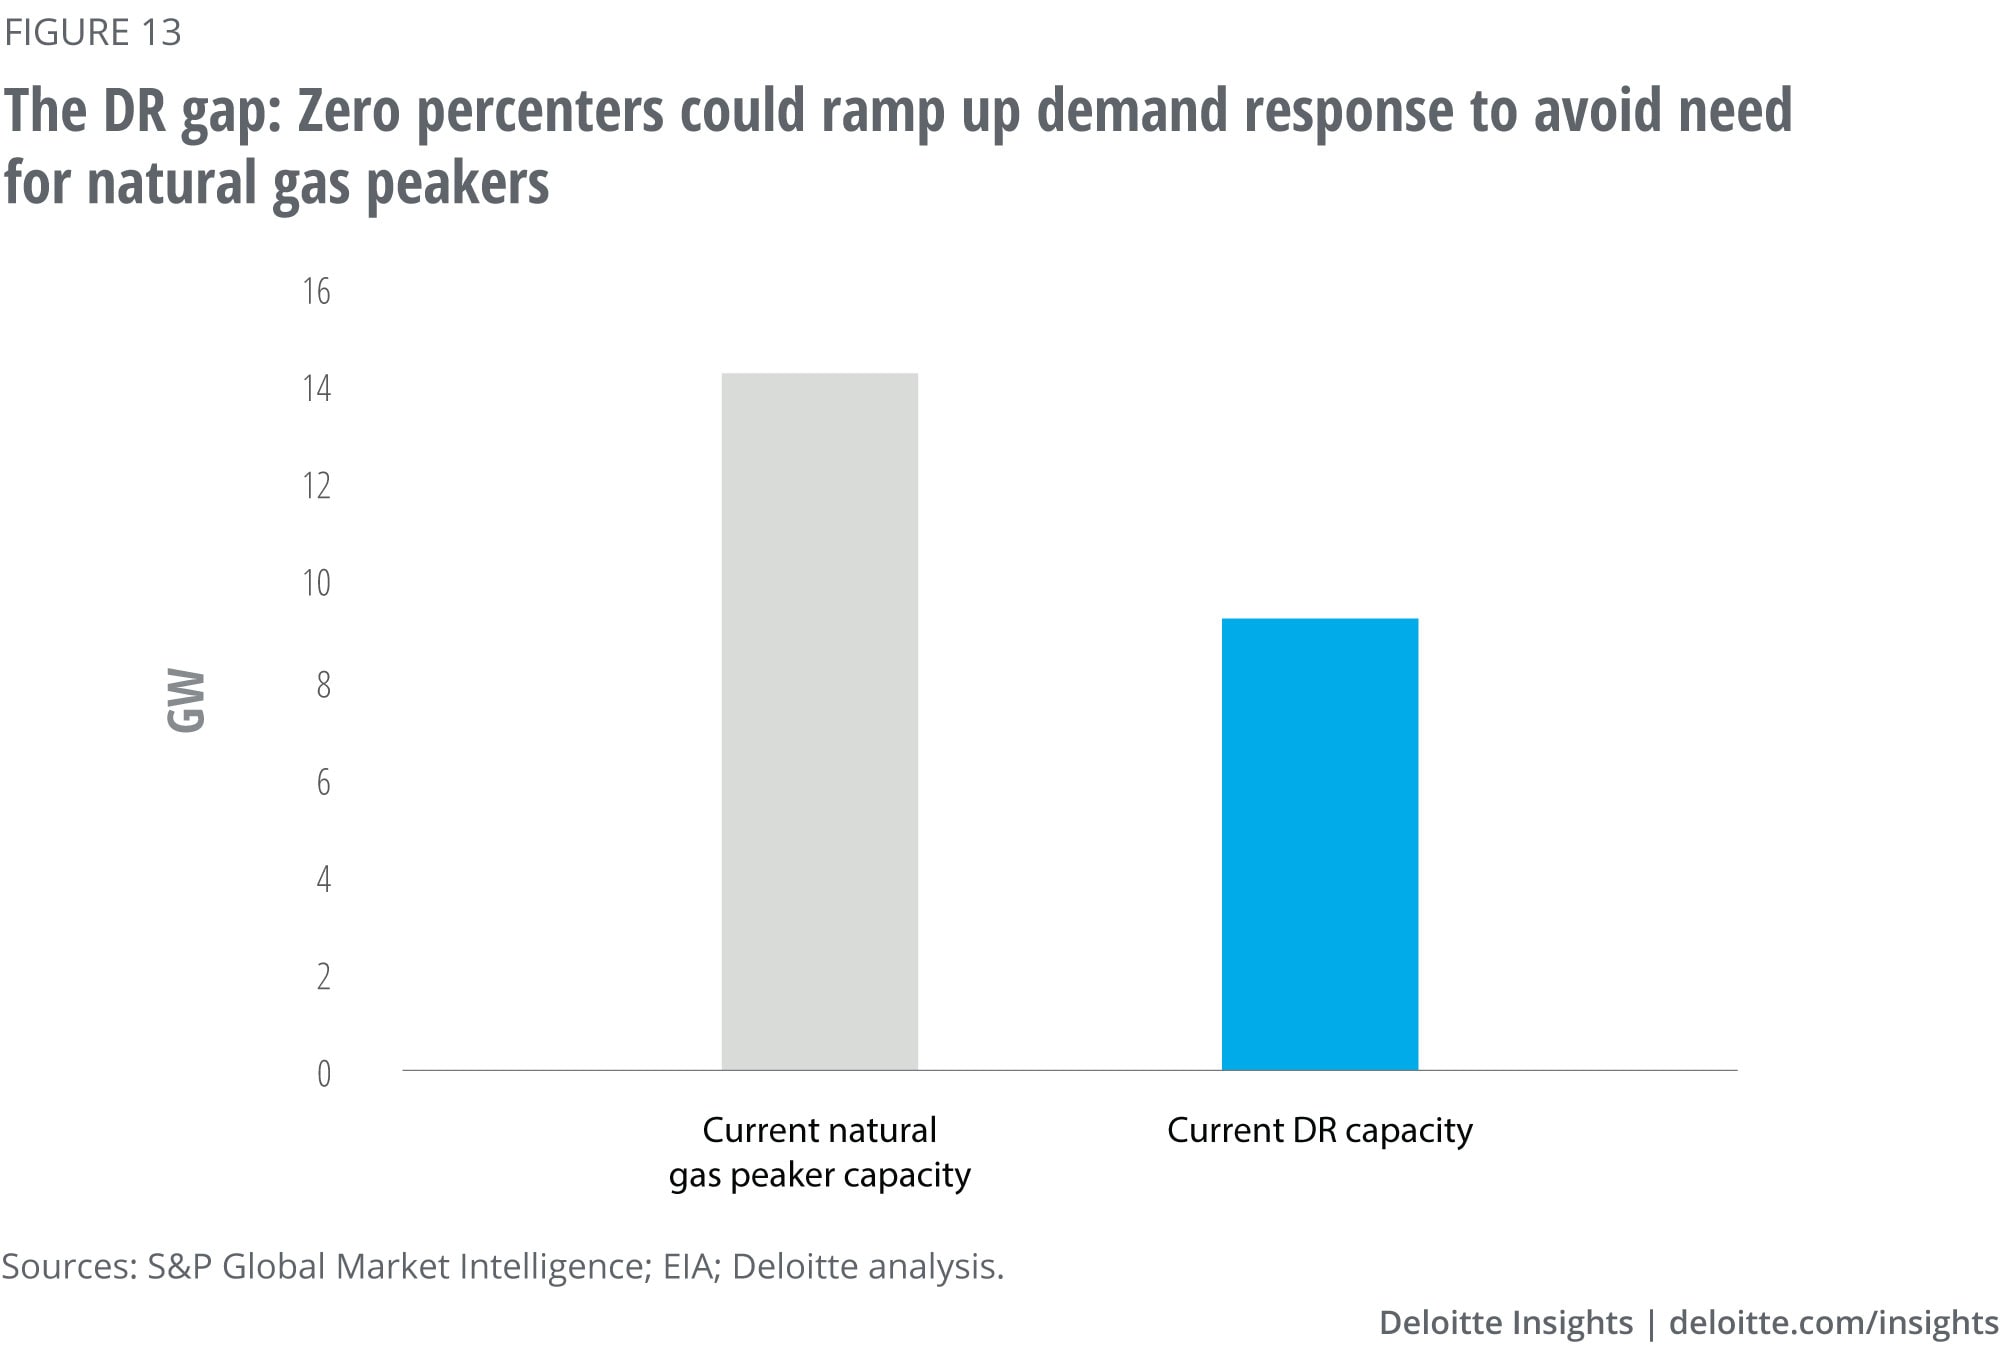 Current natural gas peaker capacity versus demand response capacity for the zero percenters